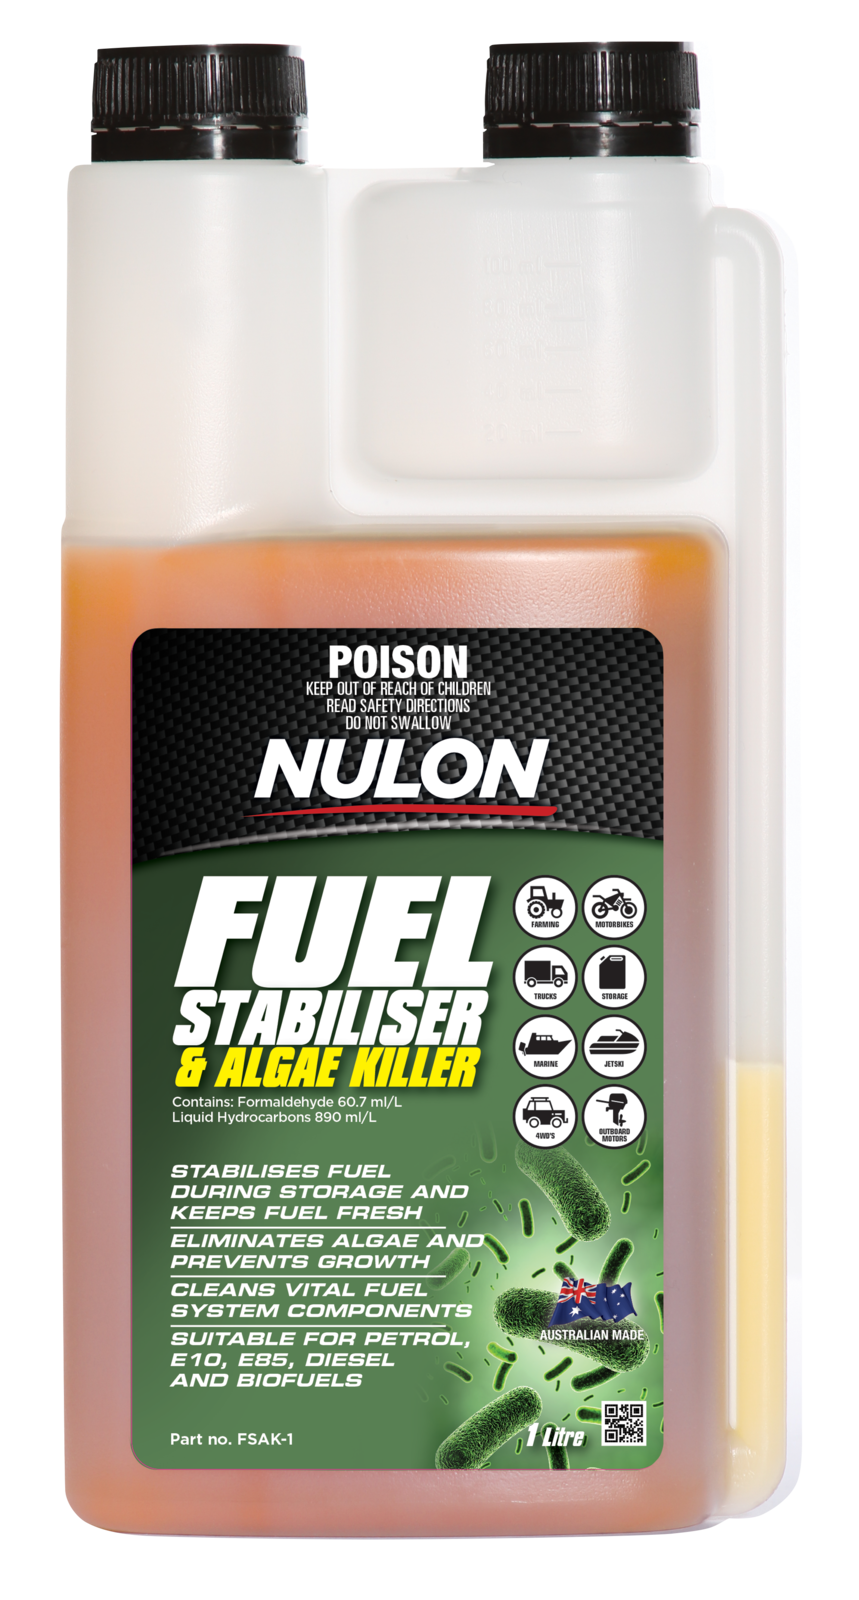 NULON Fuel Stabiliser & Algae Killer, Each